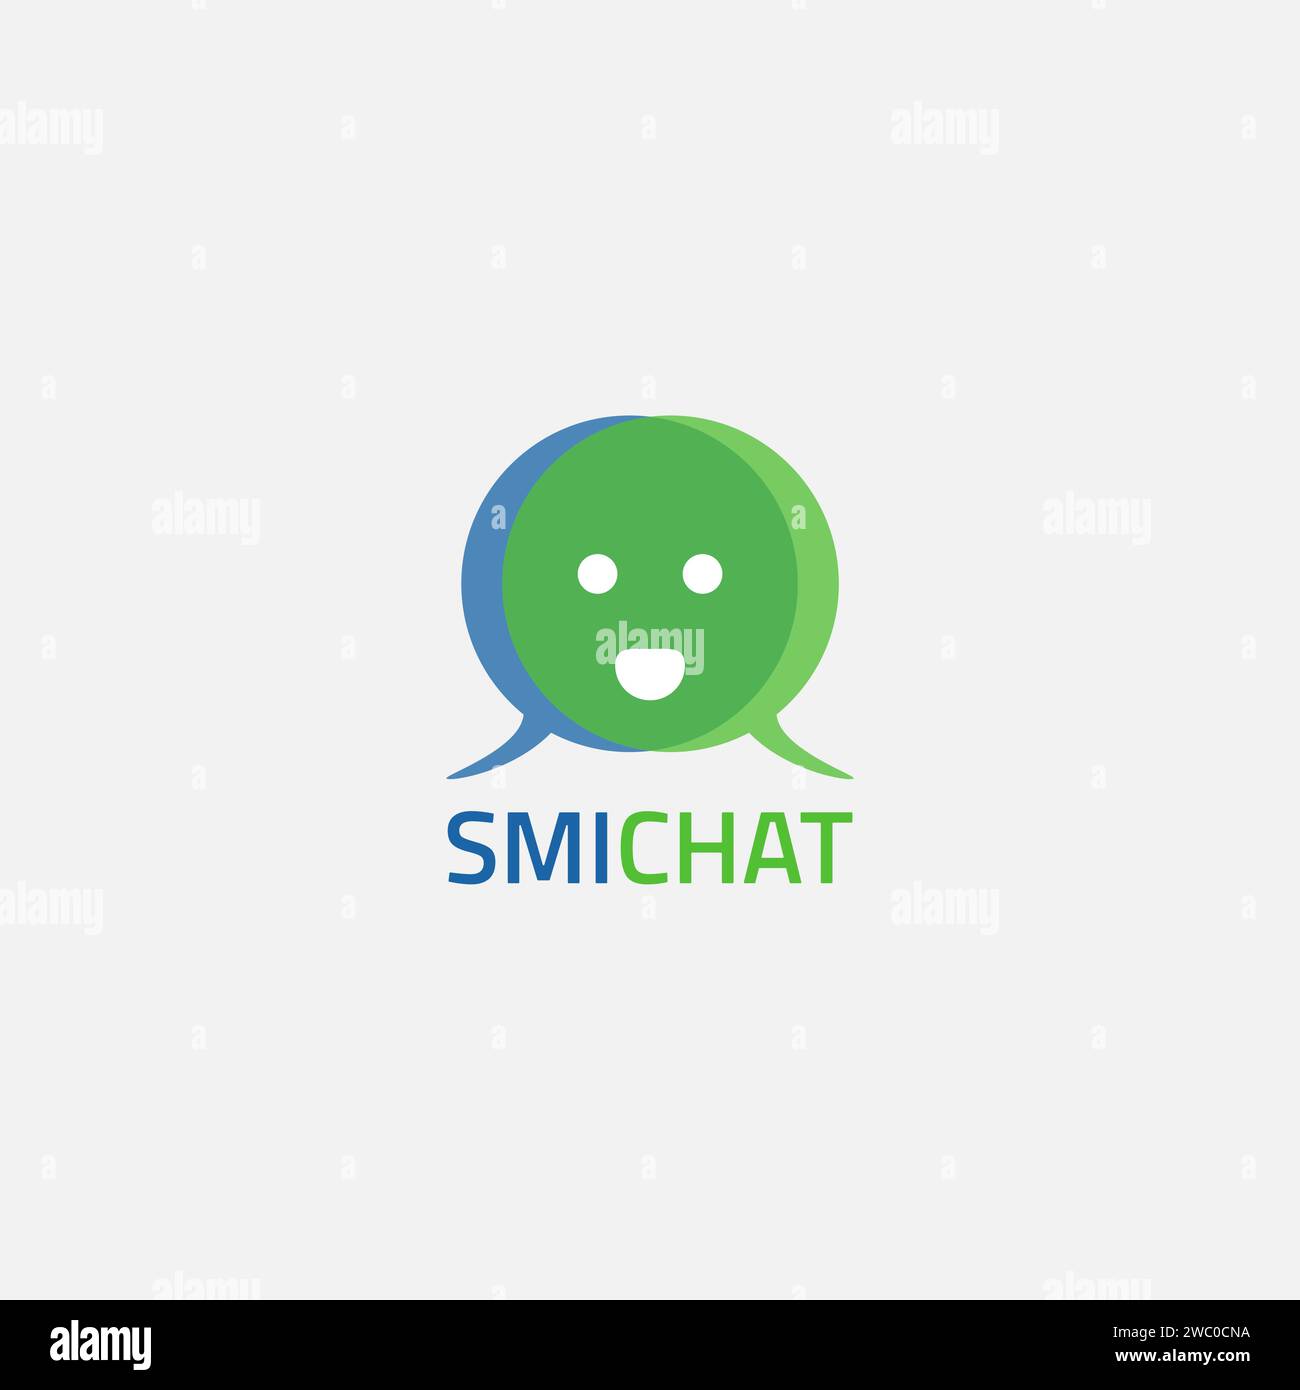 Chatting app logo with legged emoticon shape. Stock Vector